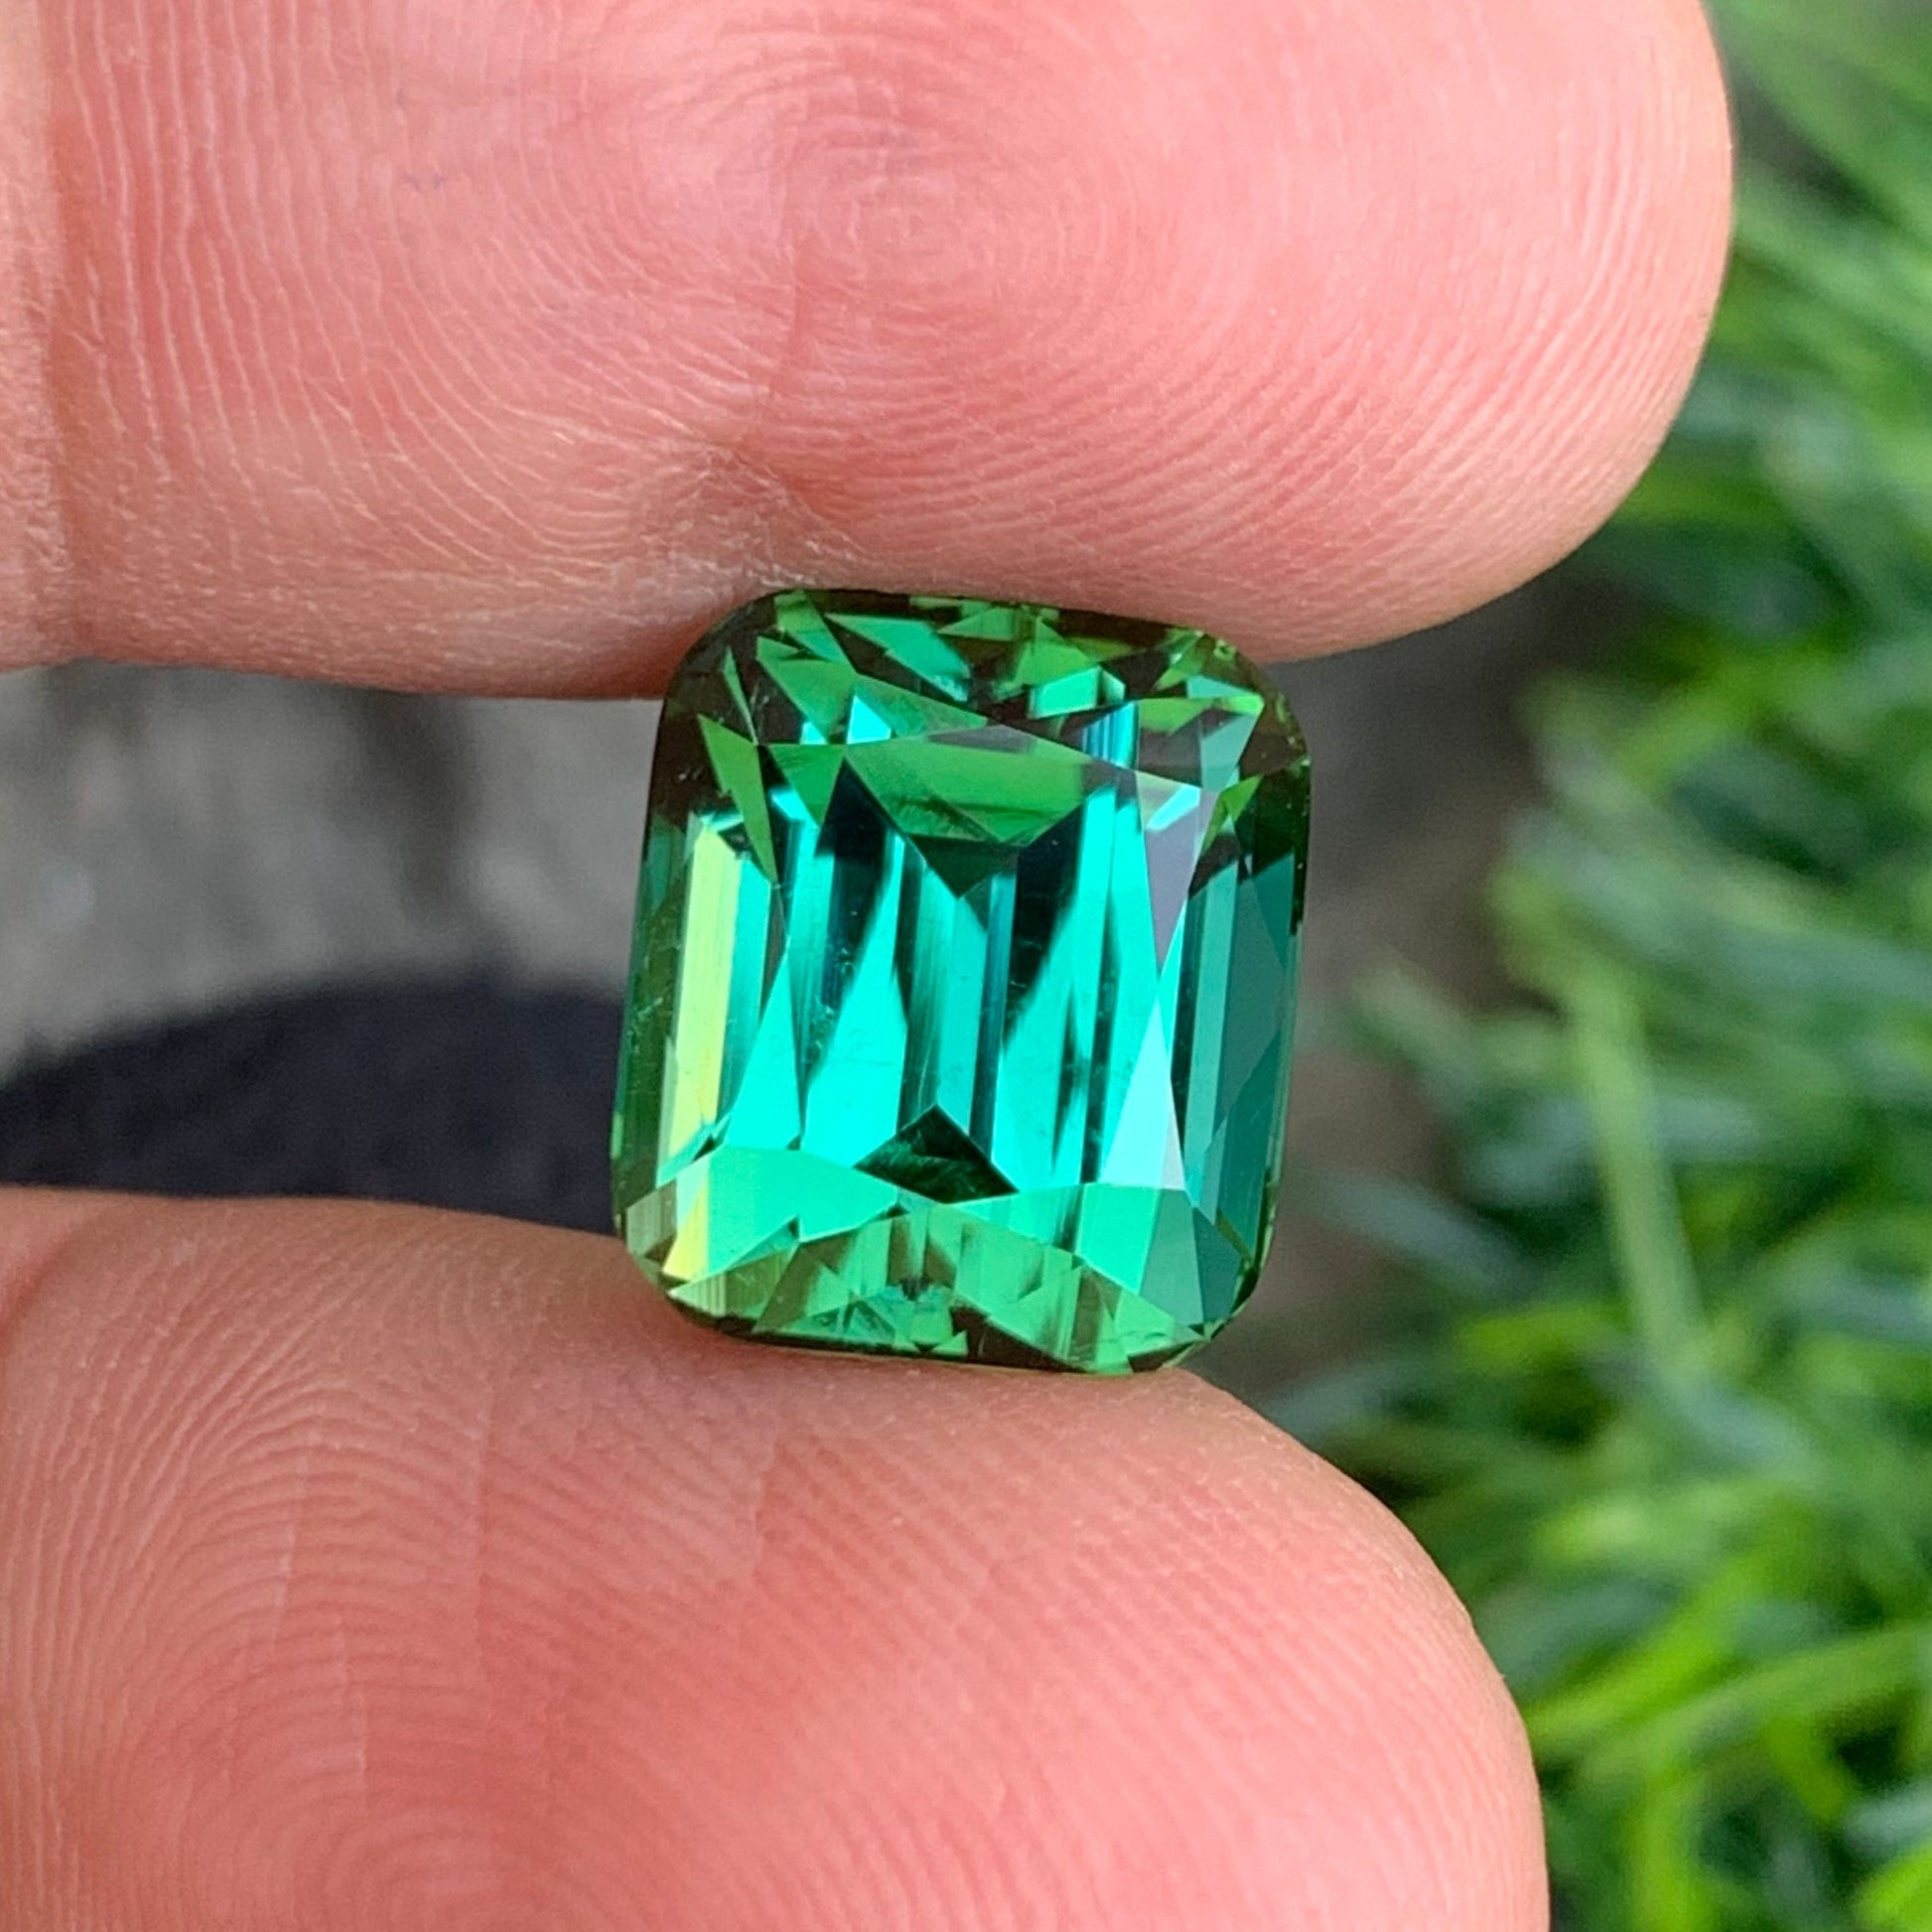 Bluish green stone